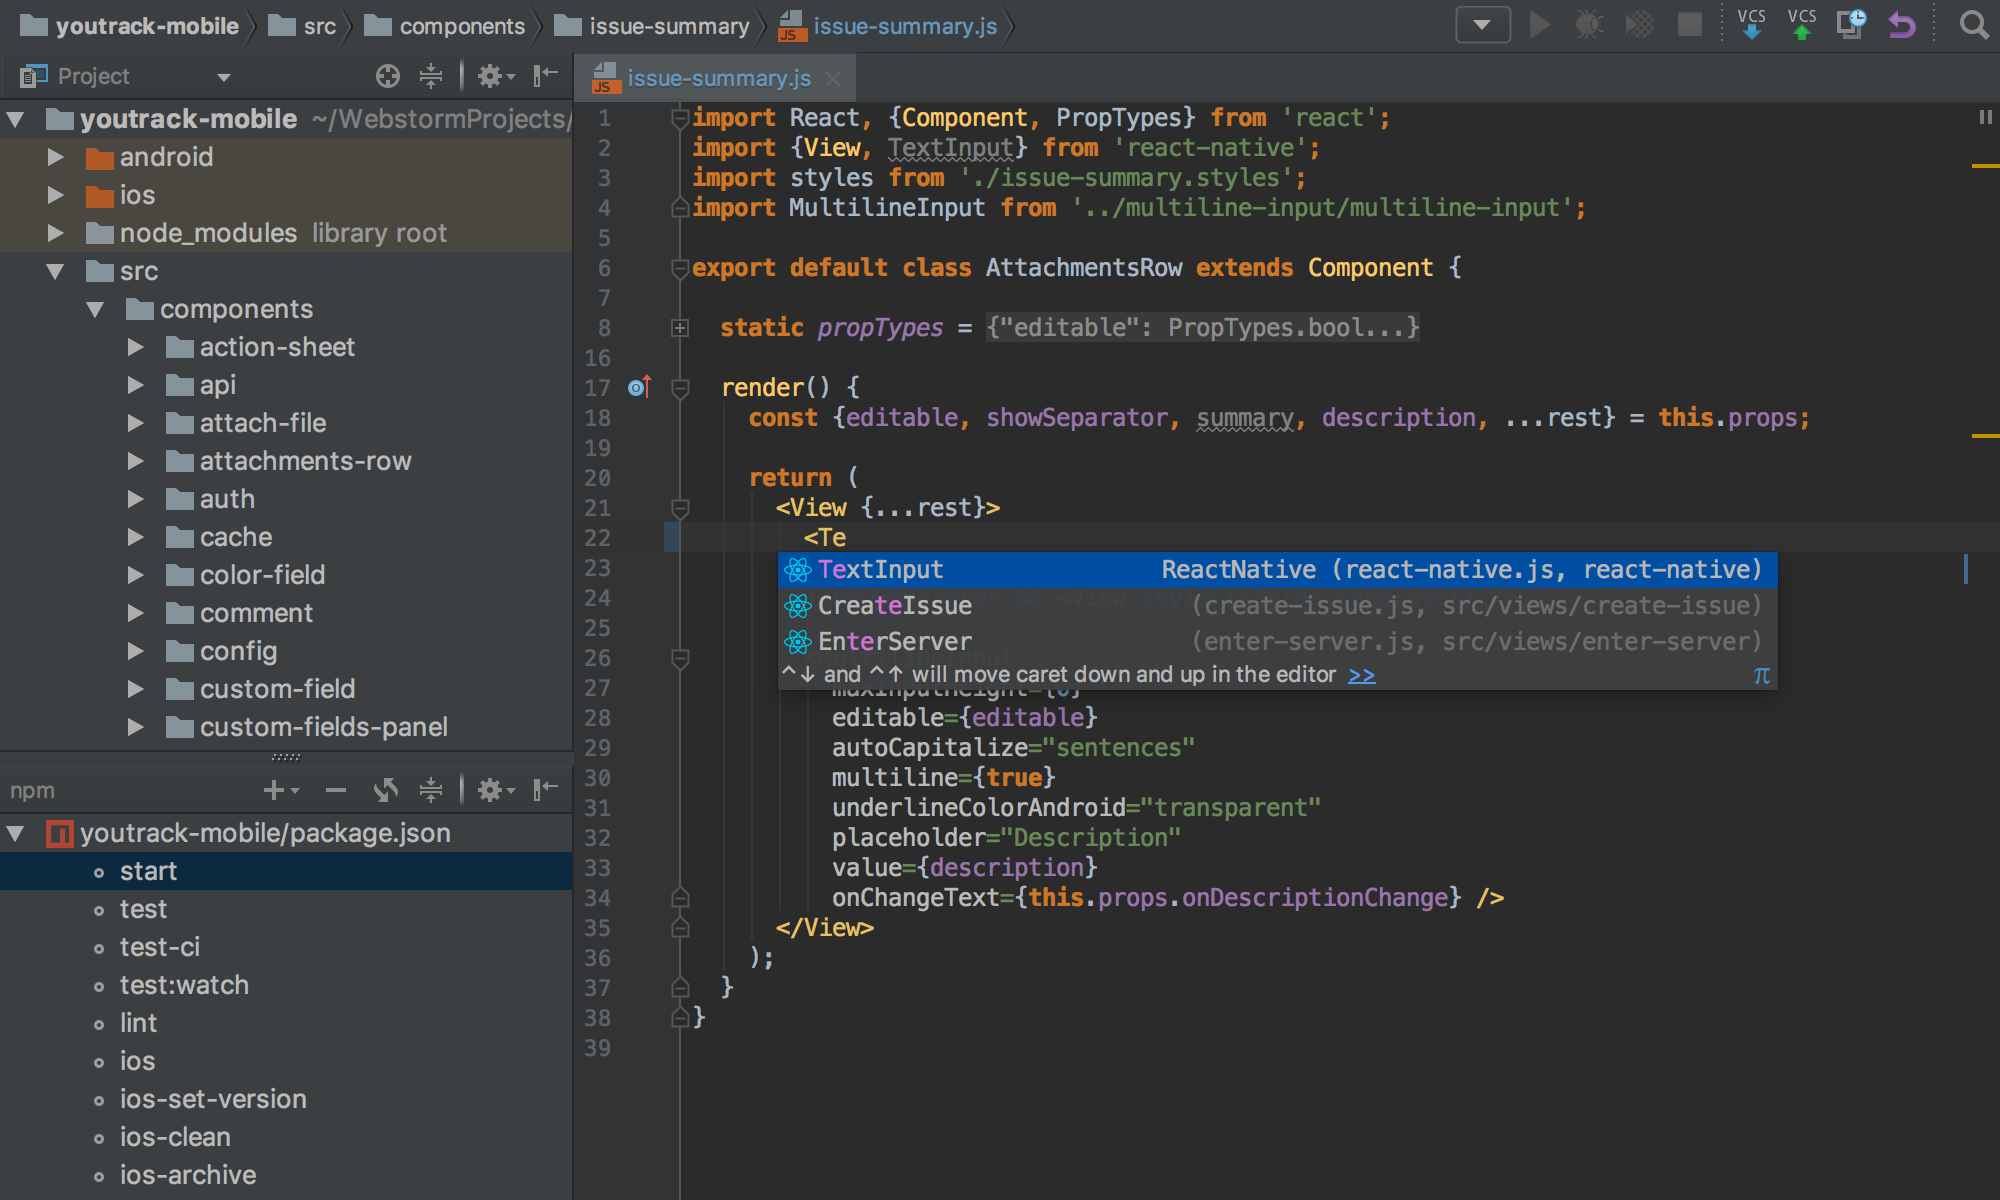 html visual studio code editor starttext on next line